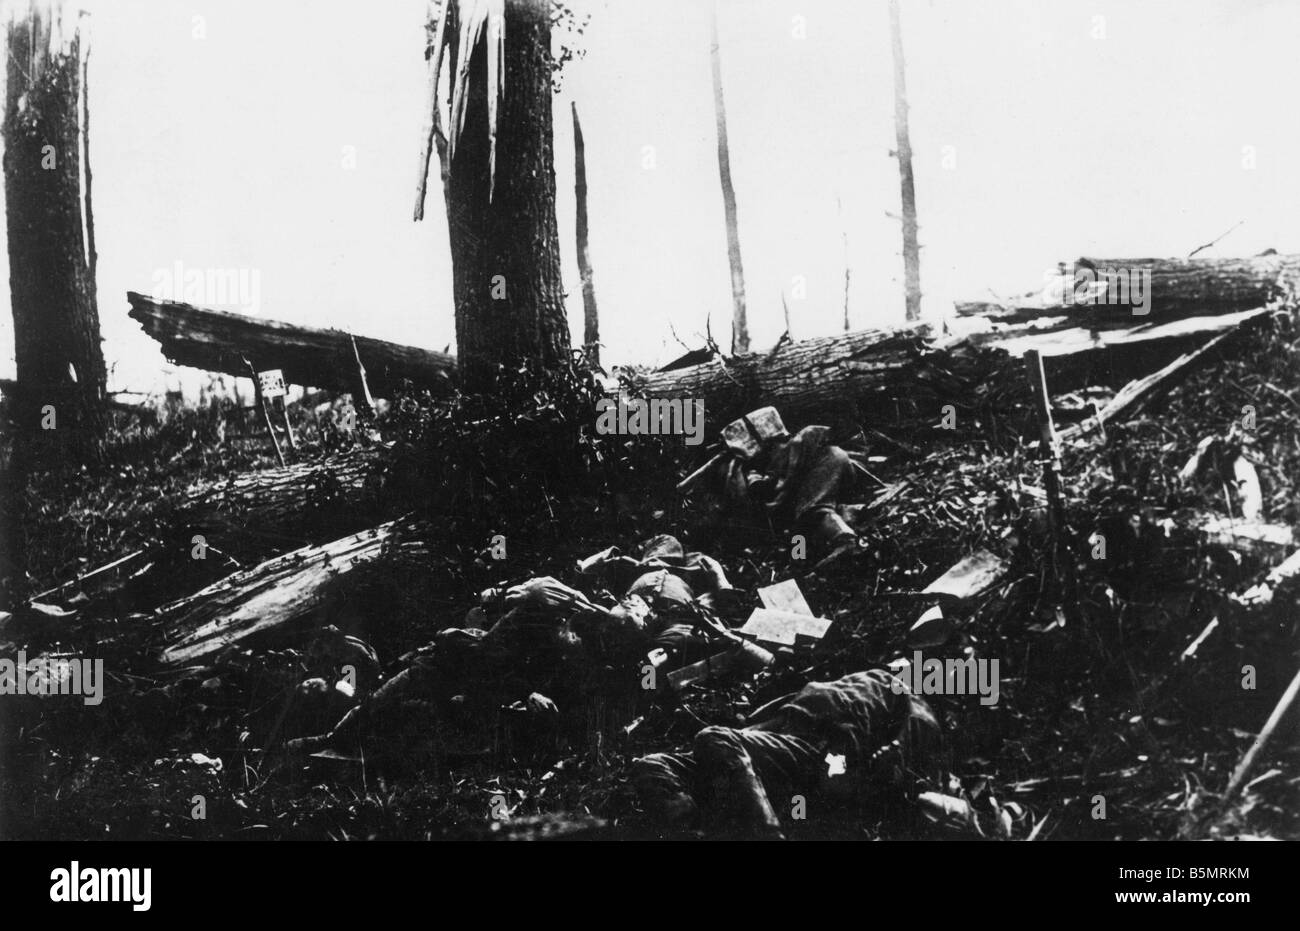 9 1918 3 0 A1 5 WW1 West Fr zerstört Batterie 1918 1. Weltkrieg Front westdeutschen große offensive März Juli 1918 zerstört Ba Stockfoto